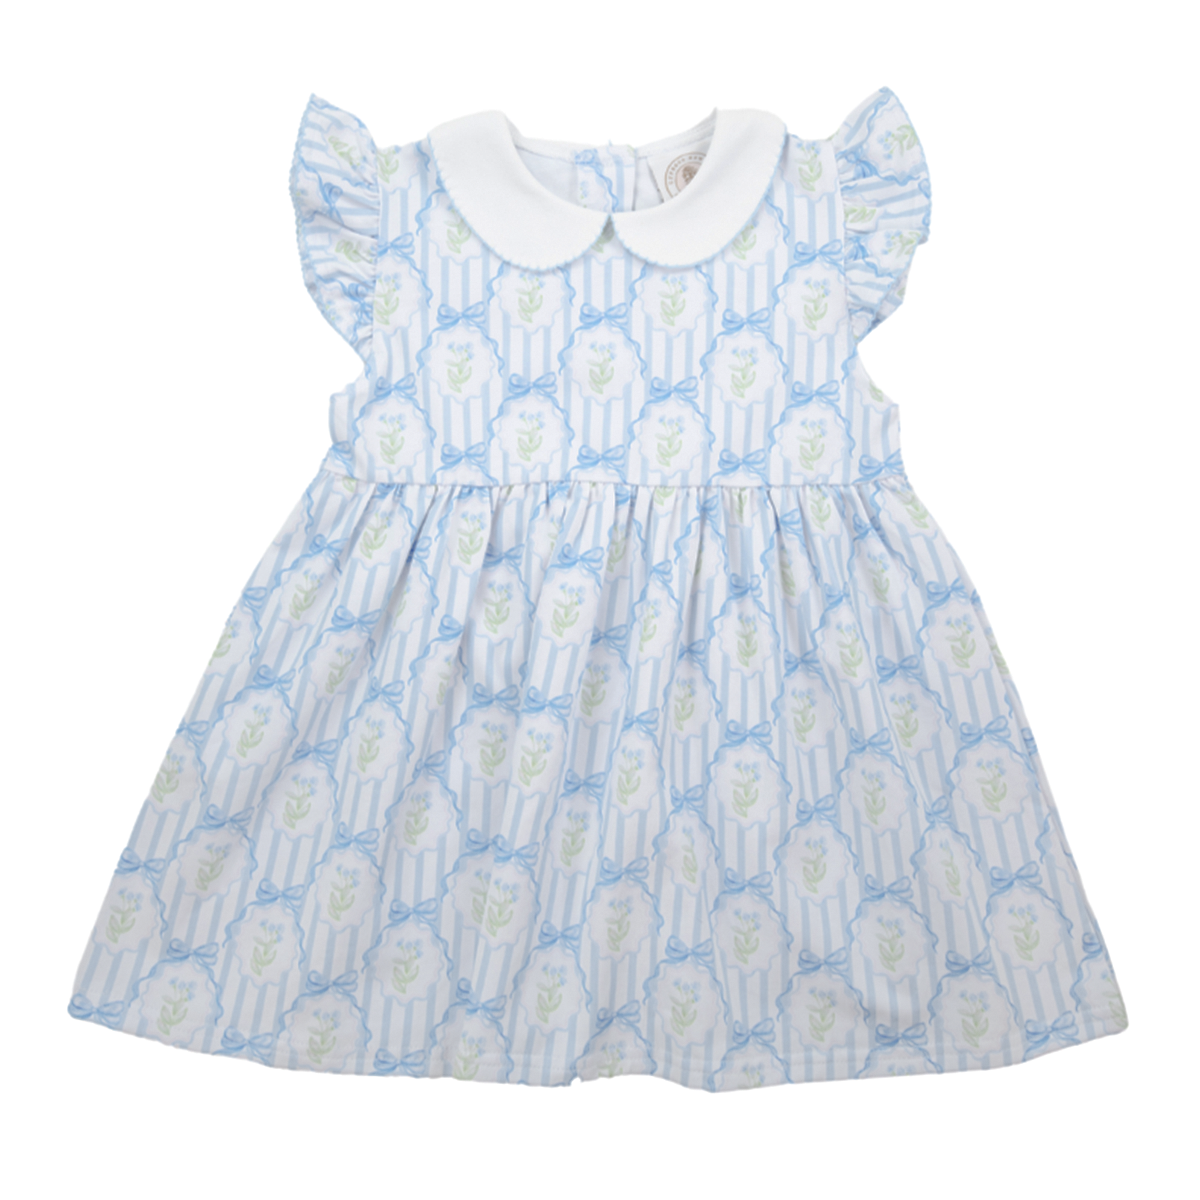 Toddler Girl's Blakley Dress by Cypress Row